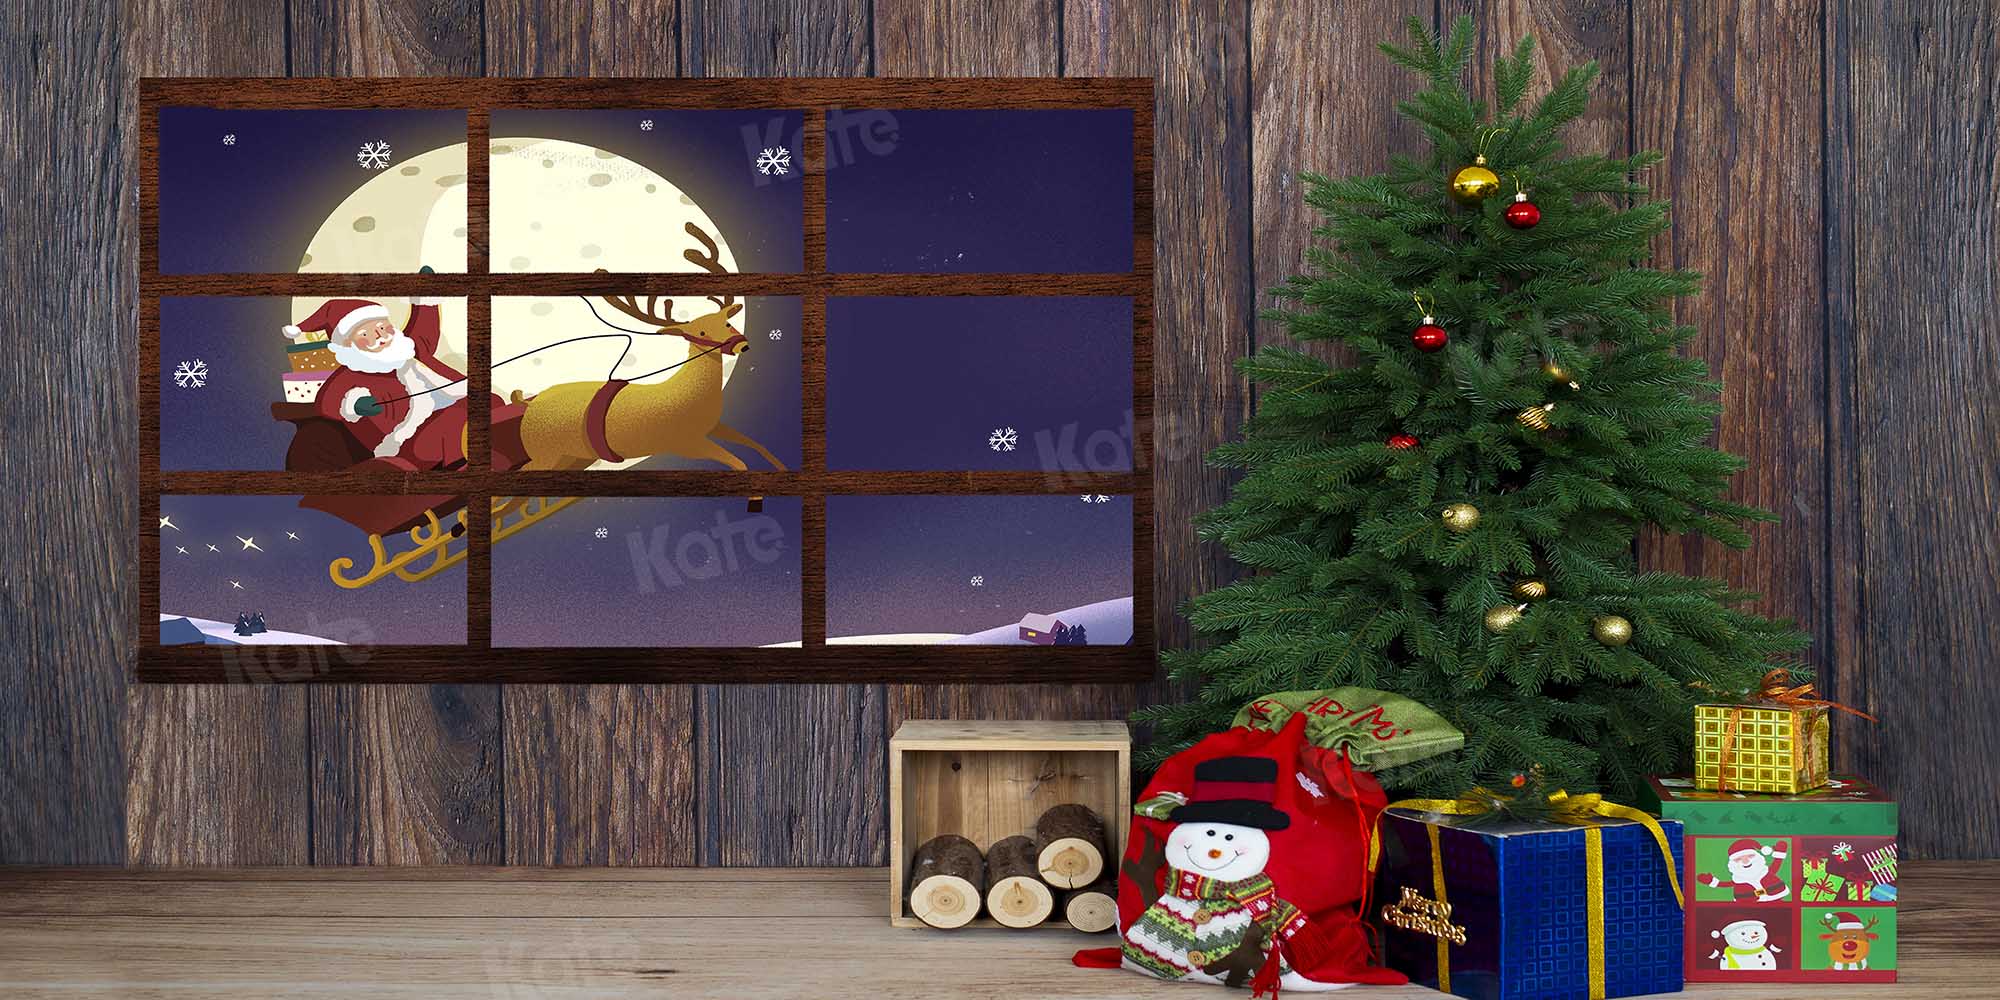 Kate Christmas Gift Wood House Window Backdrop Designed by Emetselch